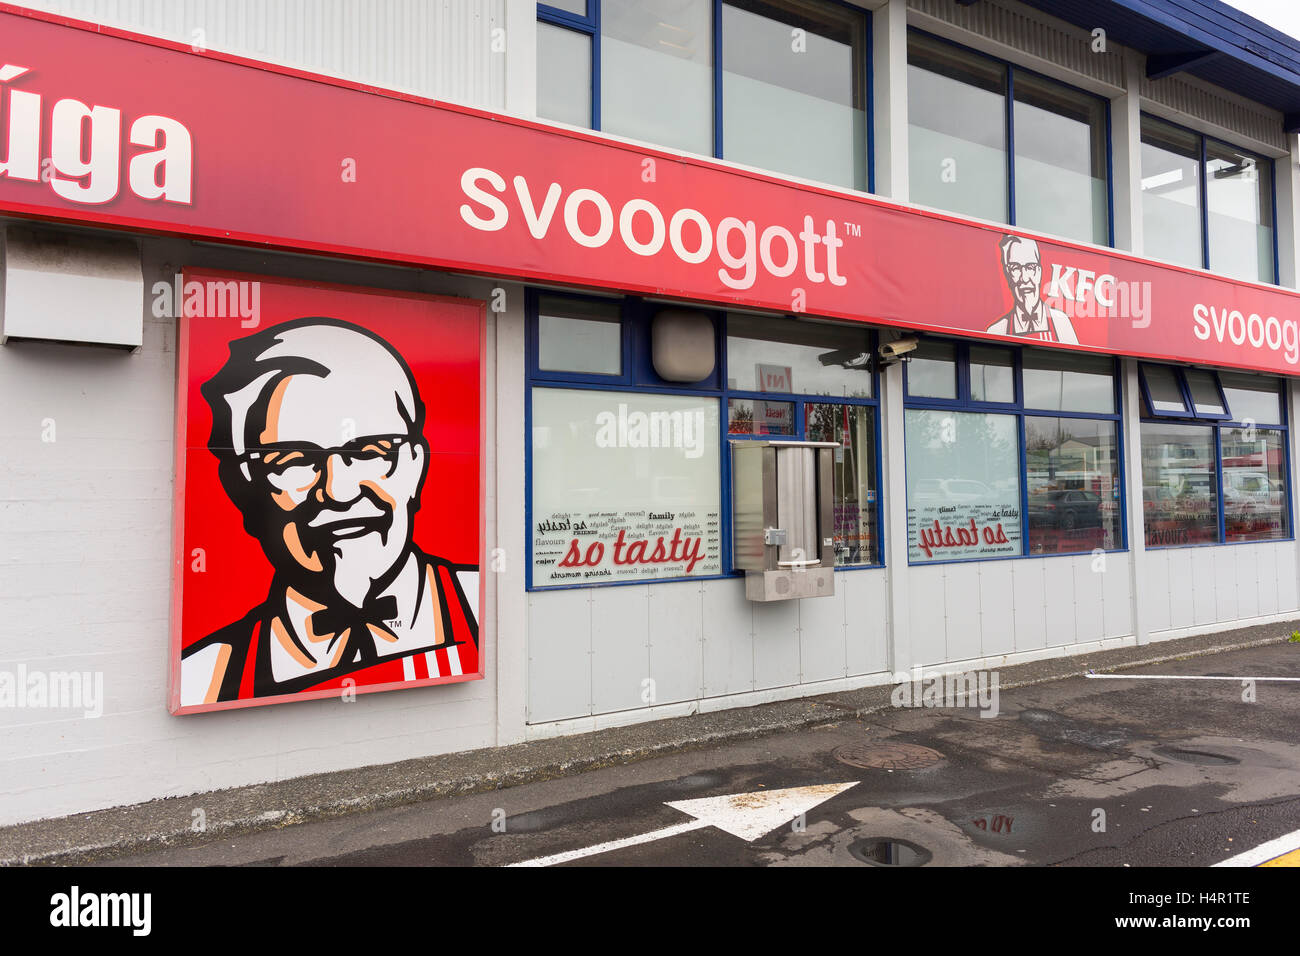 ICELAND - KFC Kentucky Fried Chicken fast food restaurant. Stock Photo